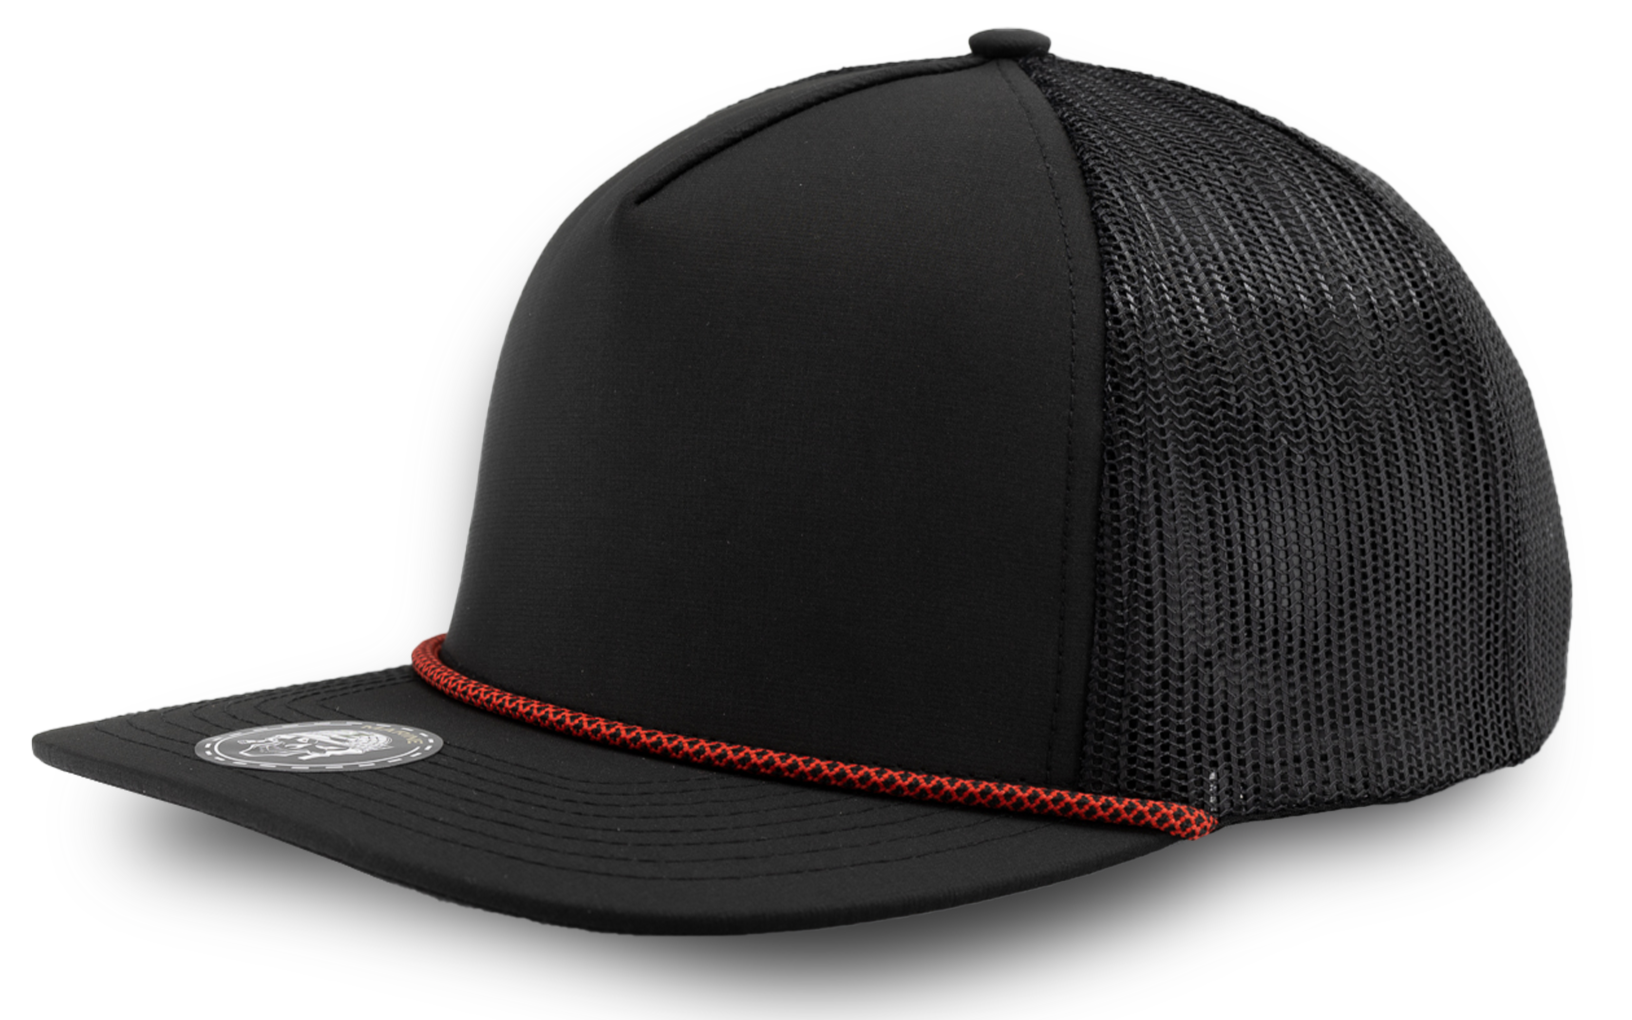 MARINE R+ (Rope brim) Blank-Water Repellent hat-Zapped Headwear-Black/Chainlink White rope-Zapped Headwear